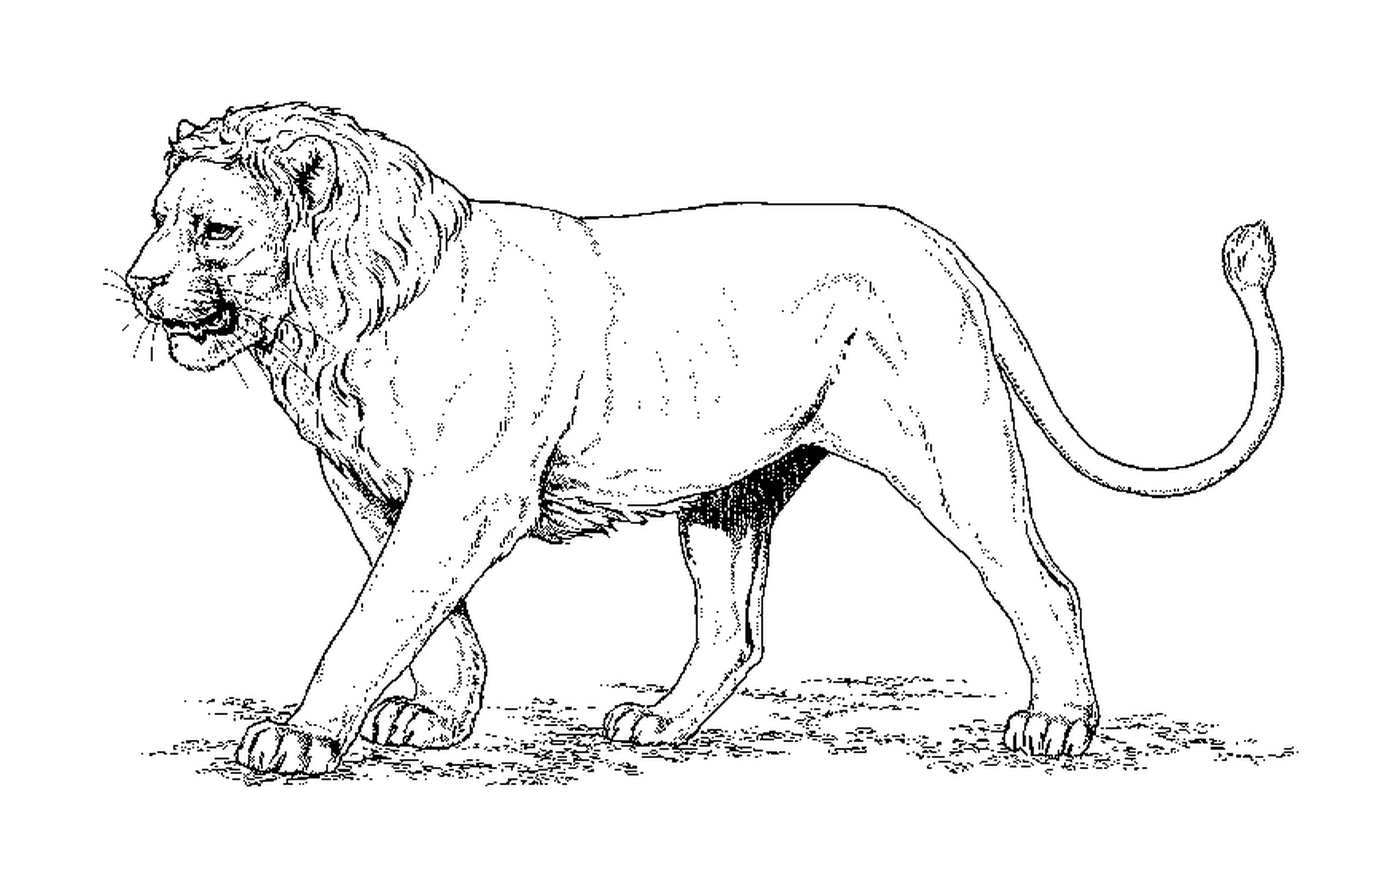  Westafrikanischer Löwe 